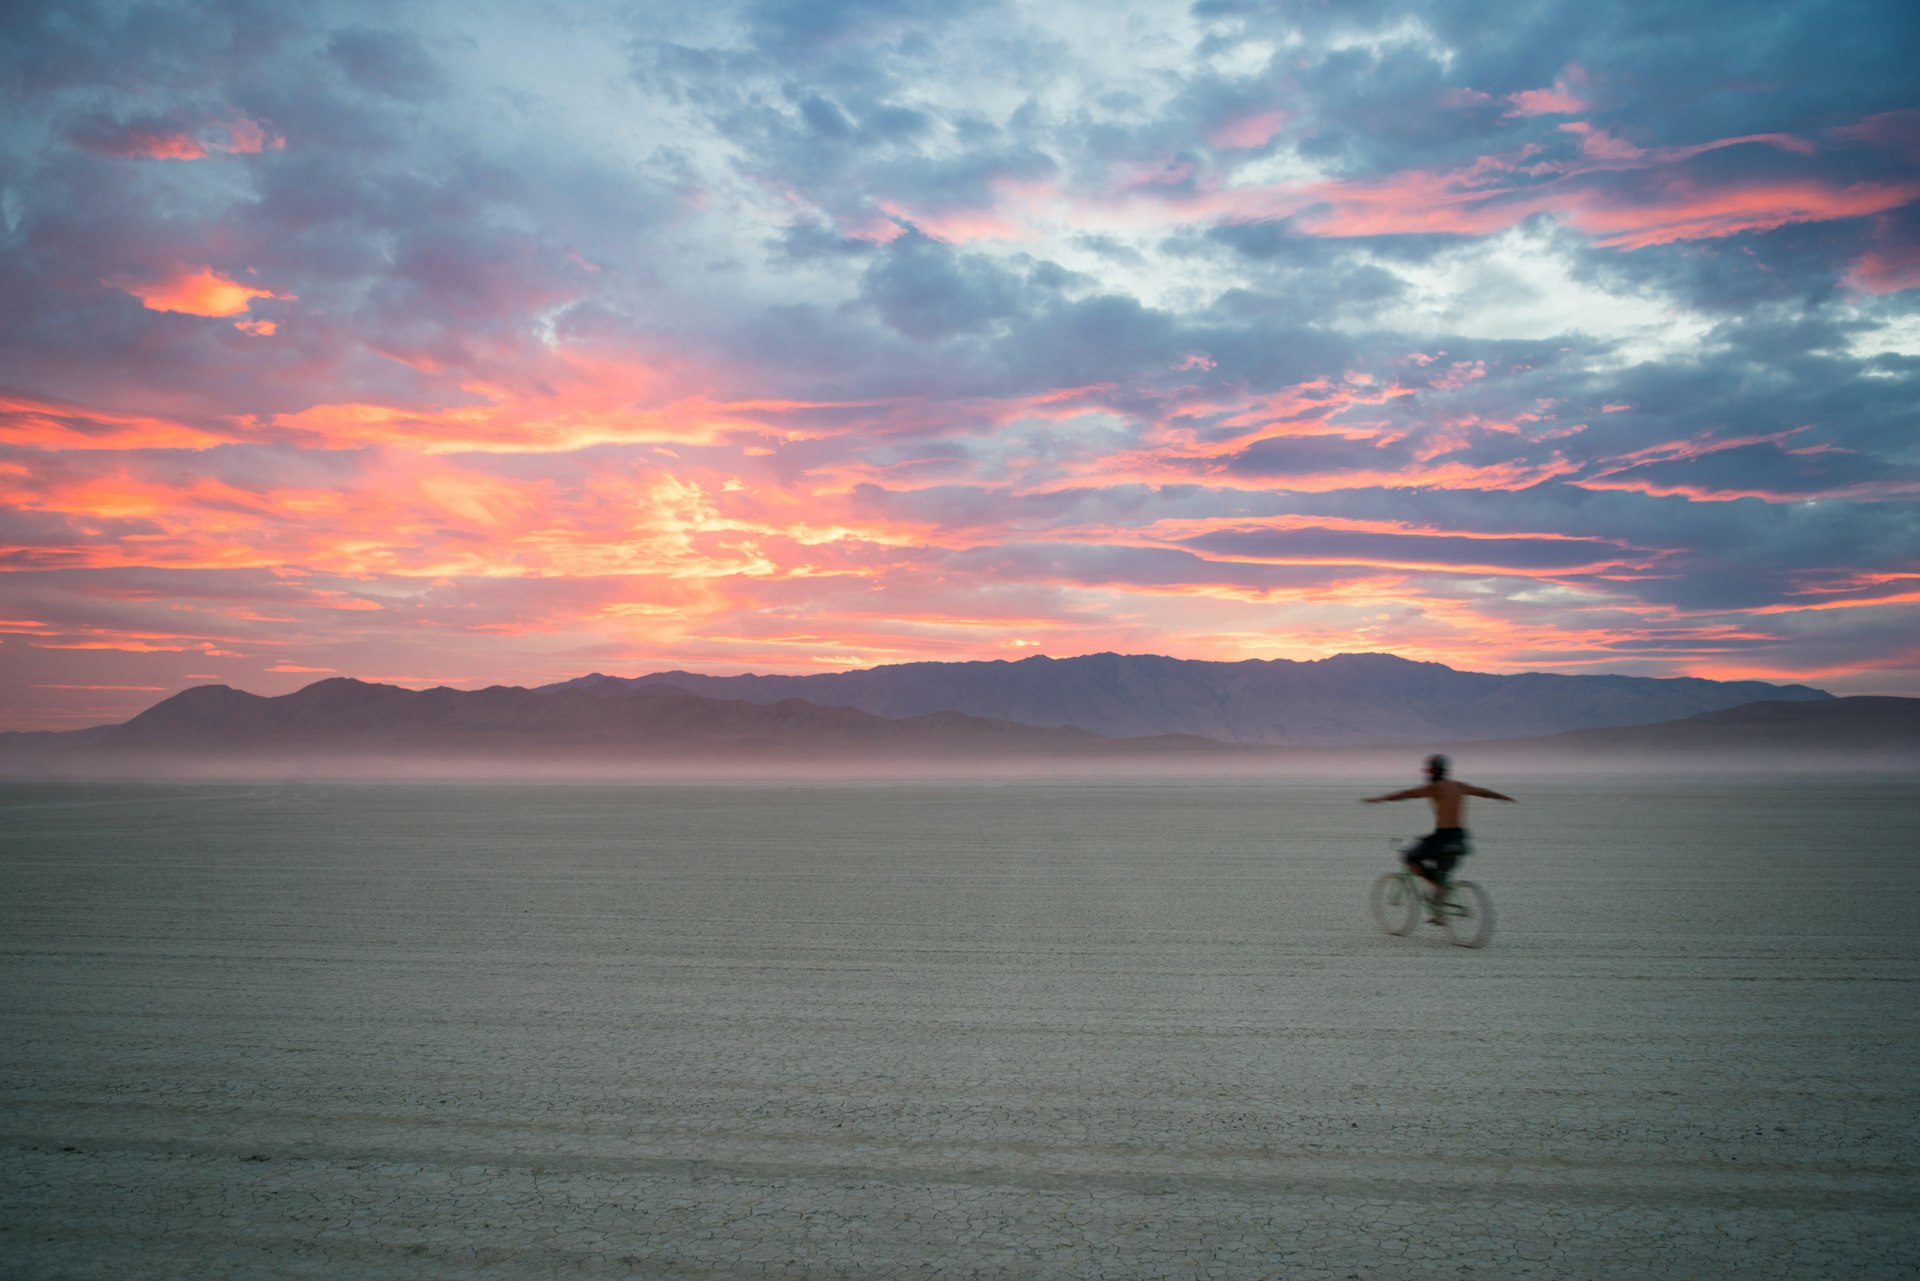 Riding into the desert sunset at Burning Man